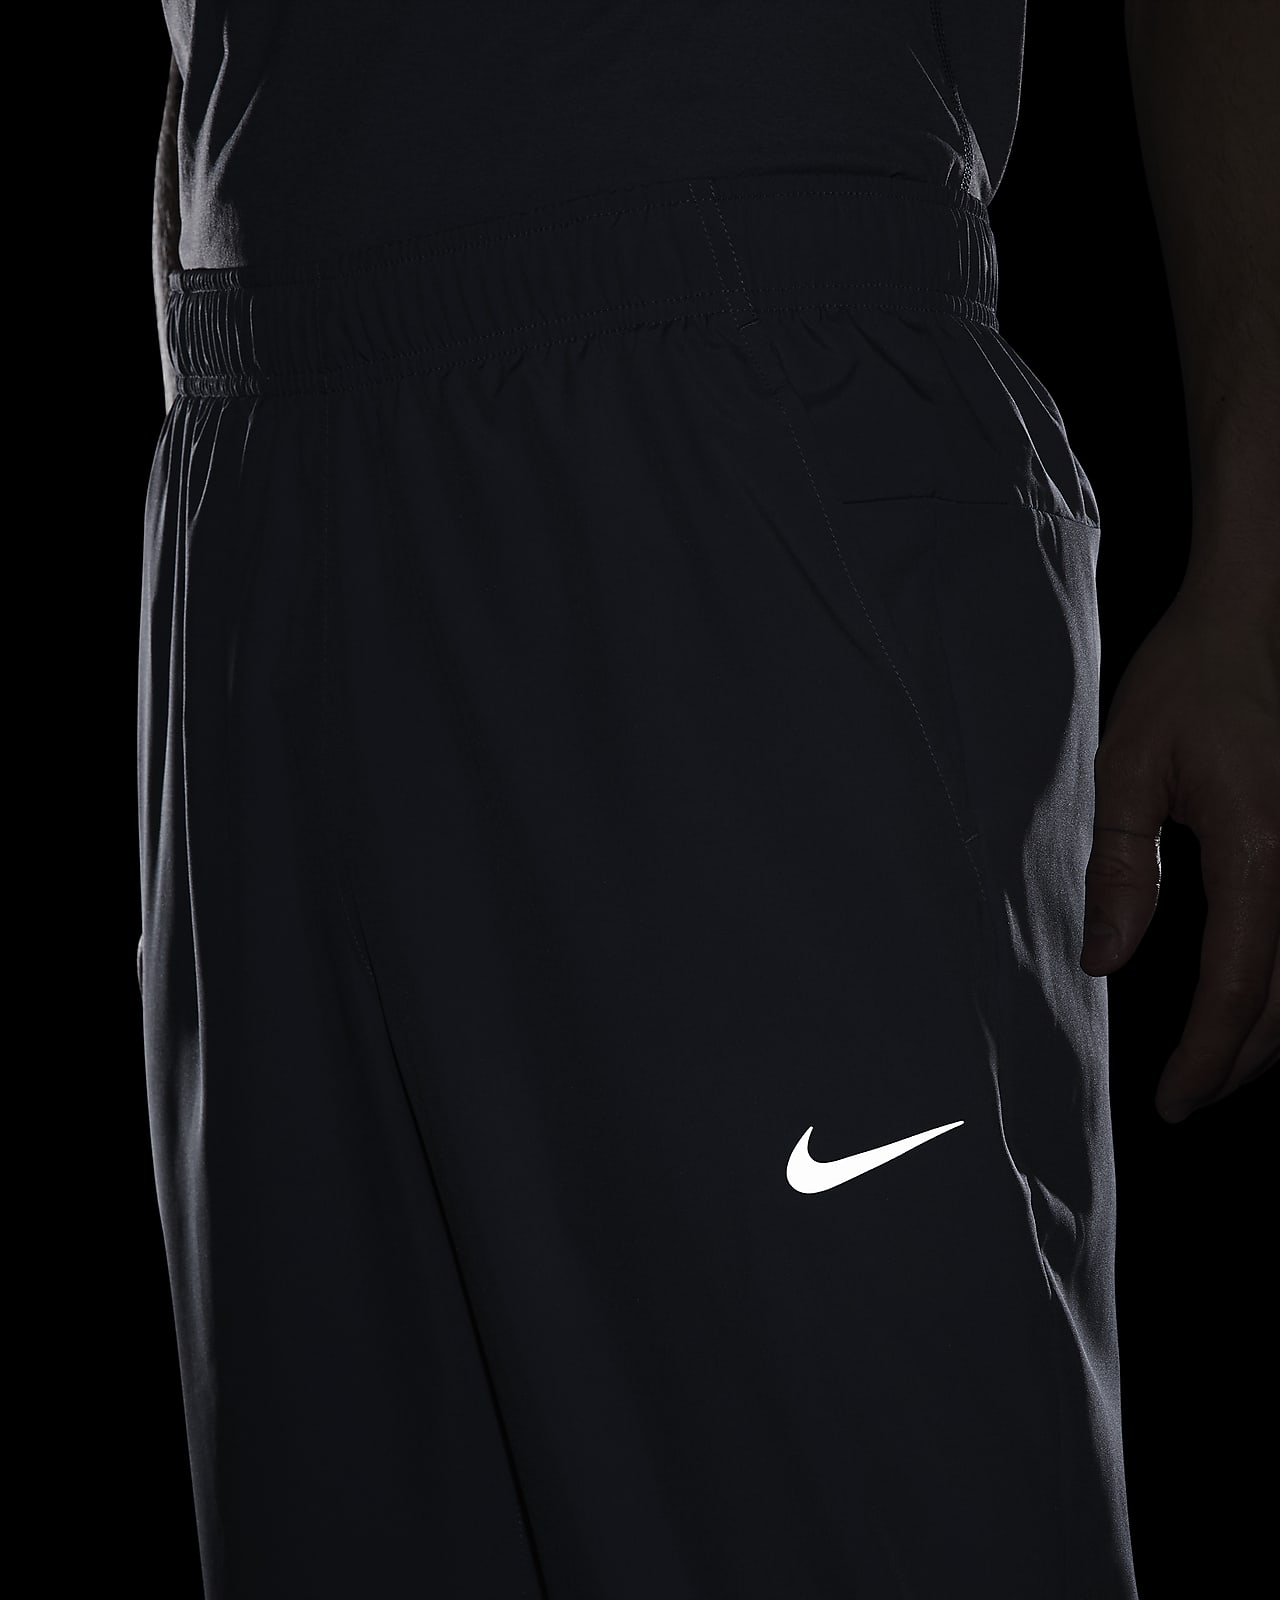 Nike Dri-FIT Totality Men's Tennis Pants - Black/White